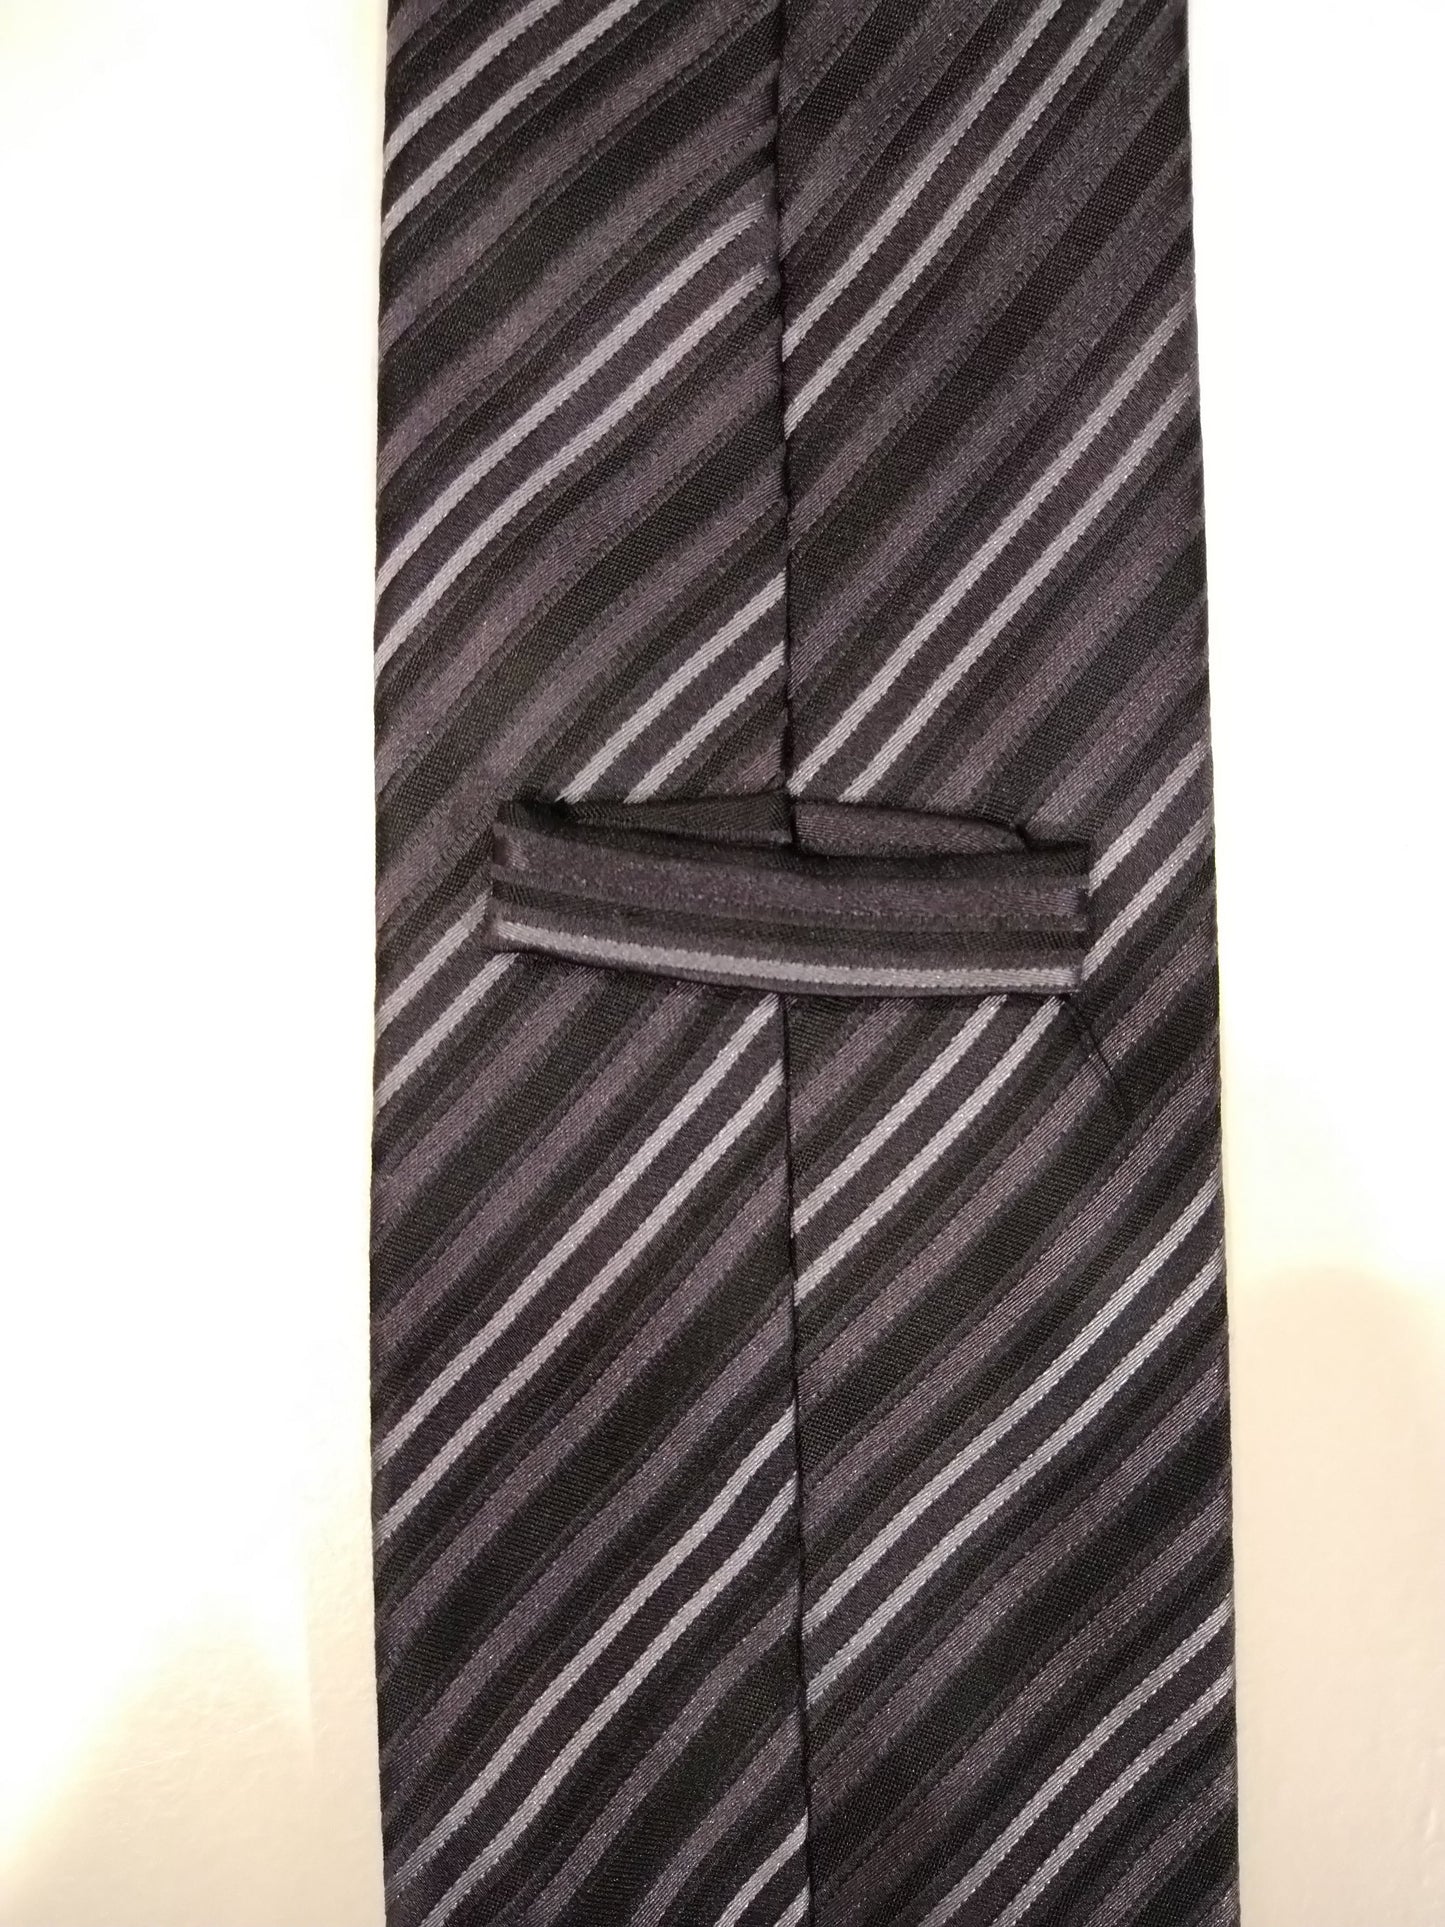 Silk tie. Black and white striped motif